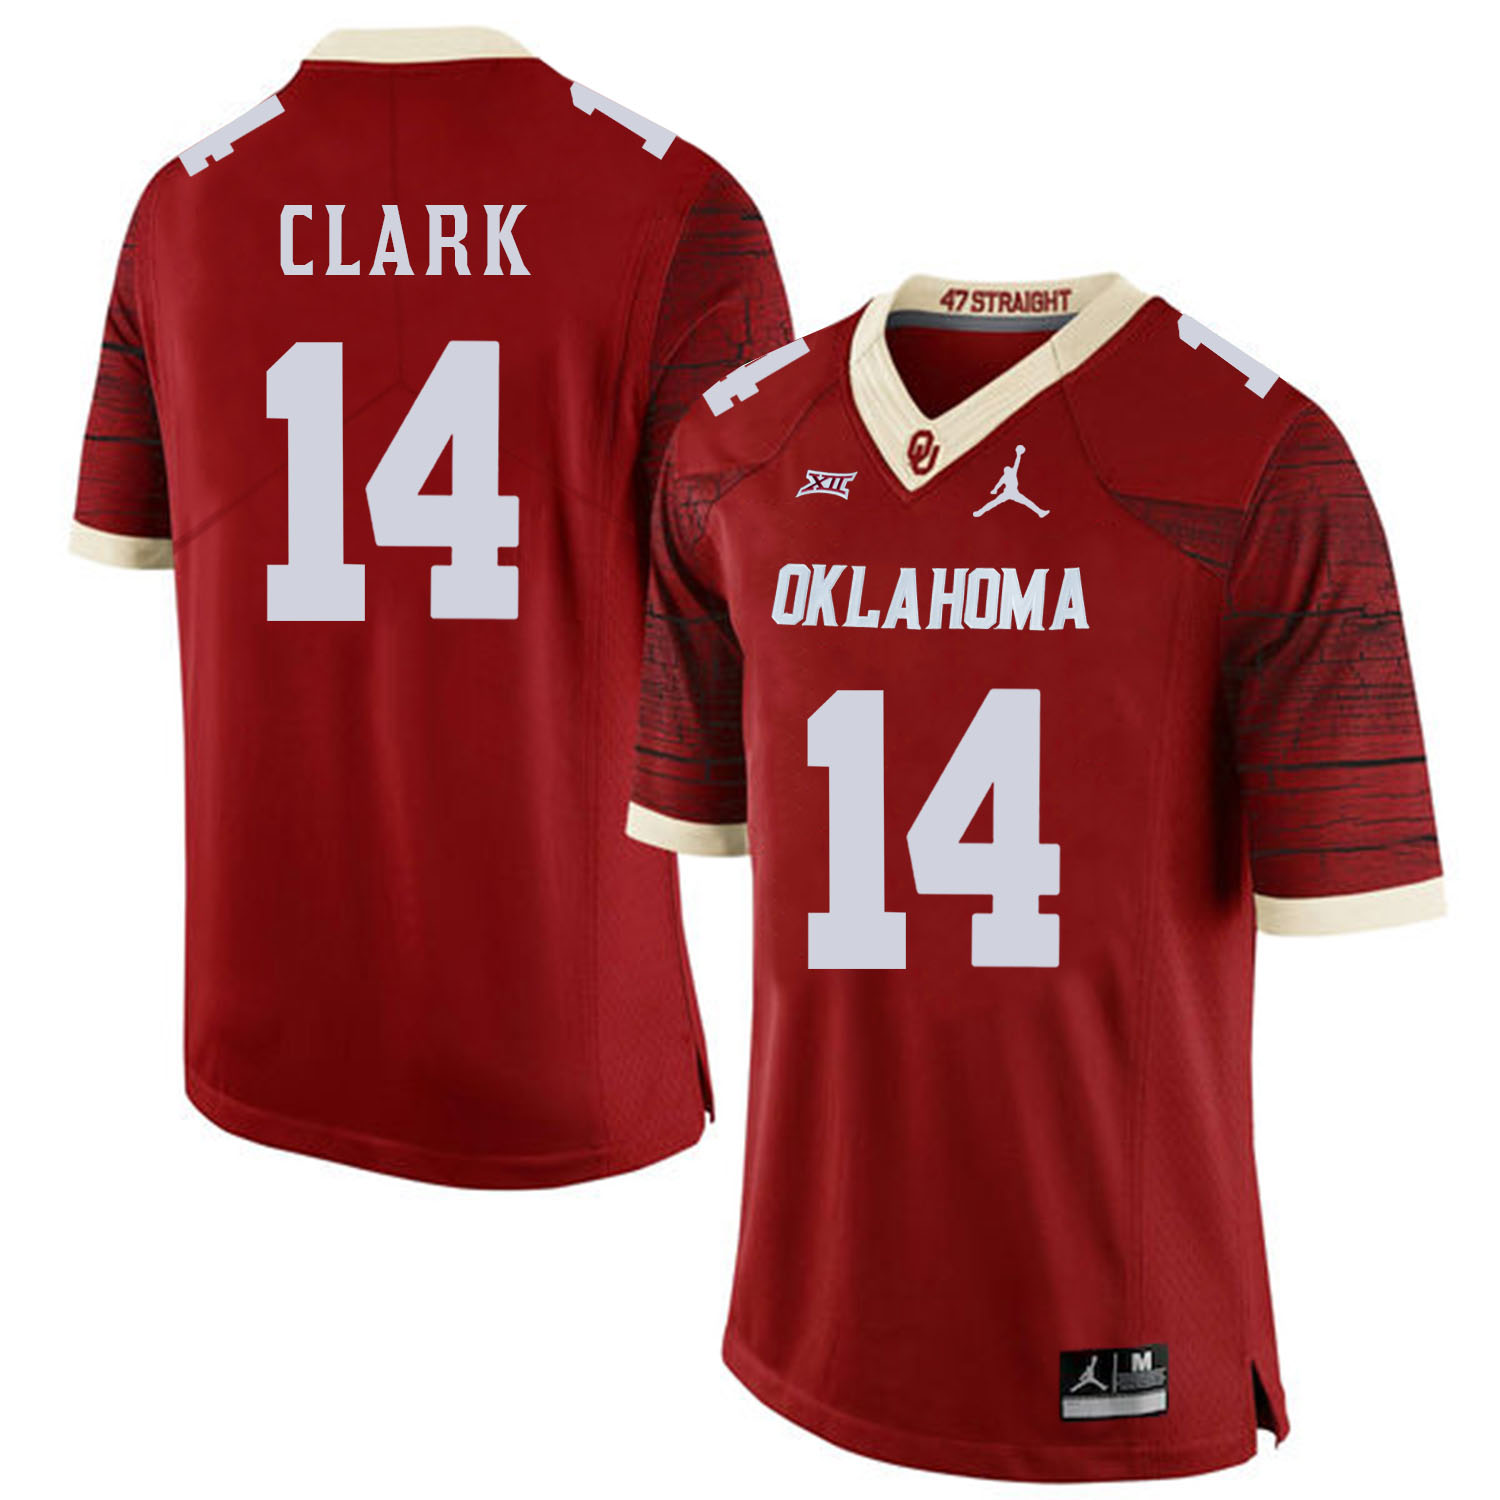 Oklahoma Sooners 14 Reece Clark Red 47 Game Winning Streak College Football Jersey